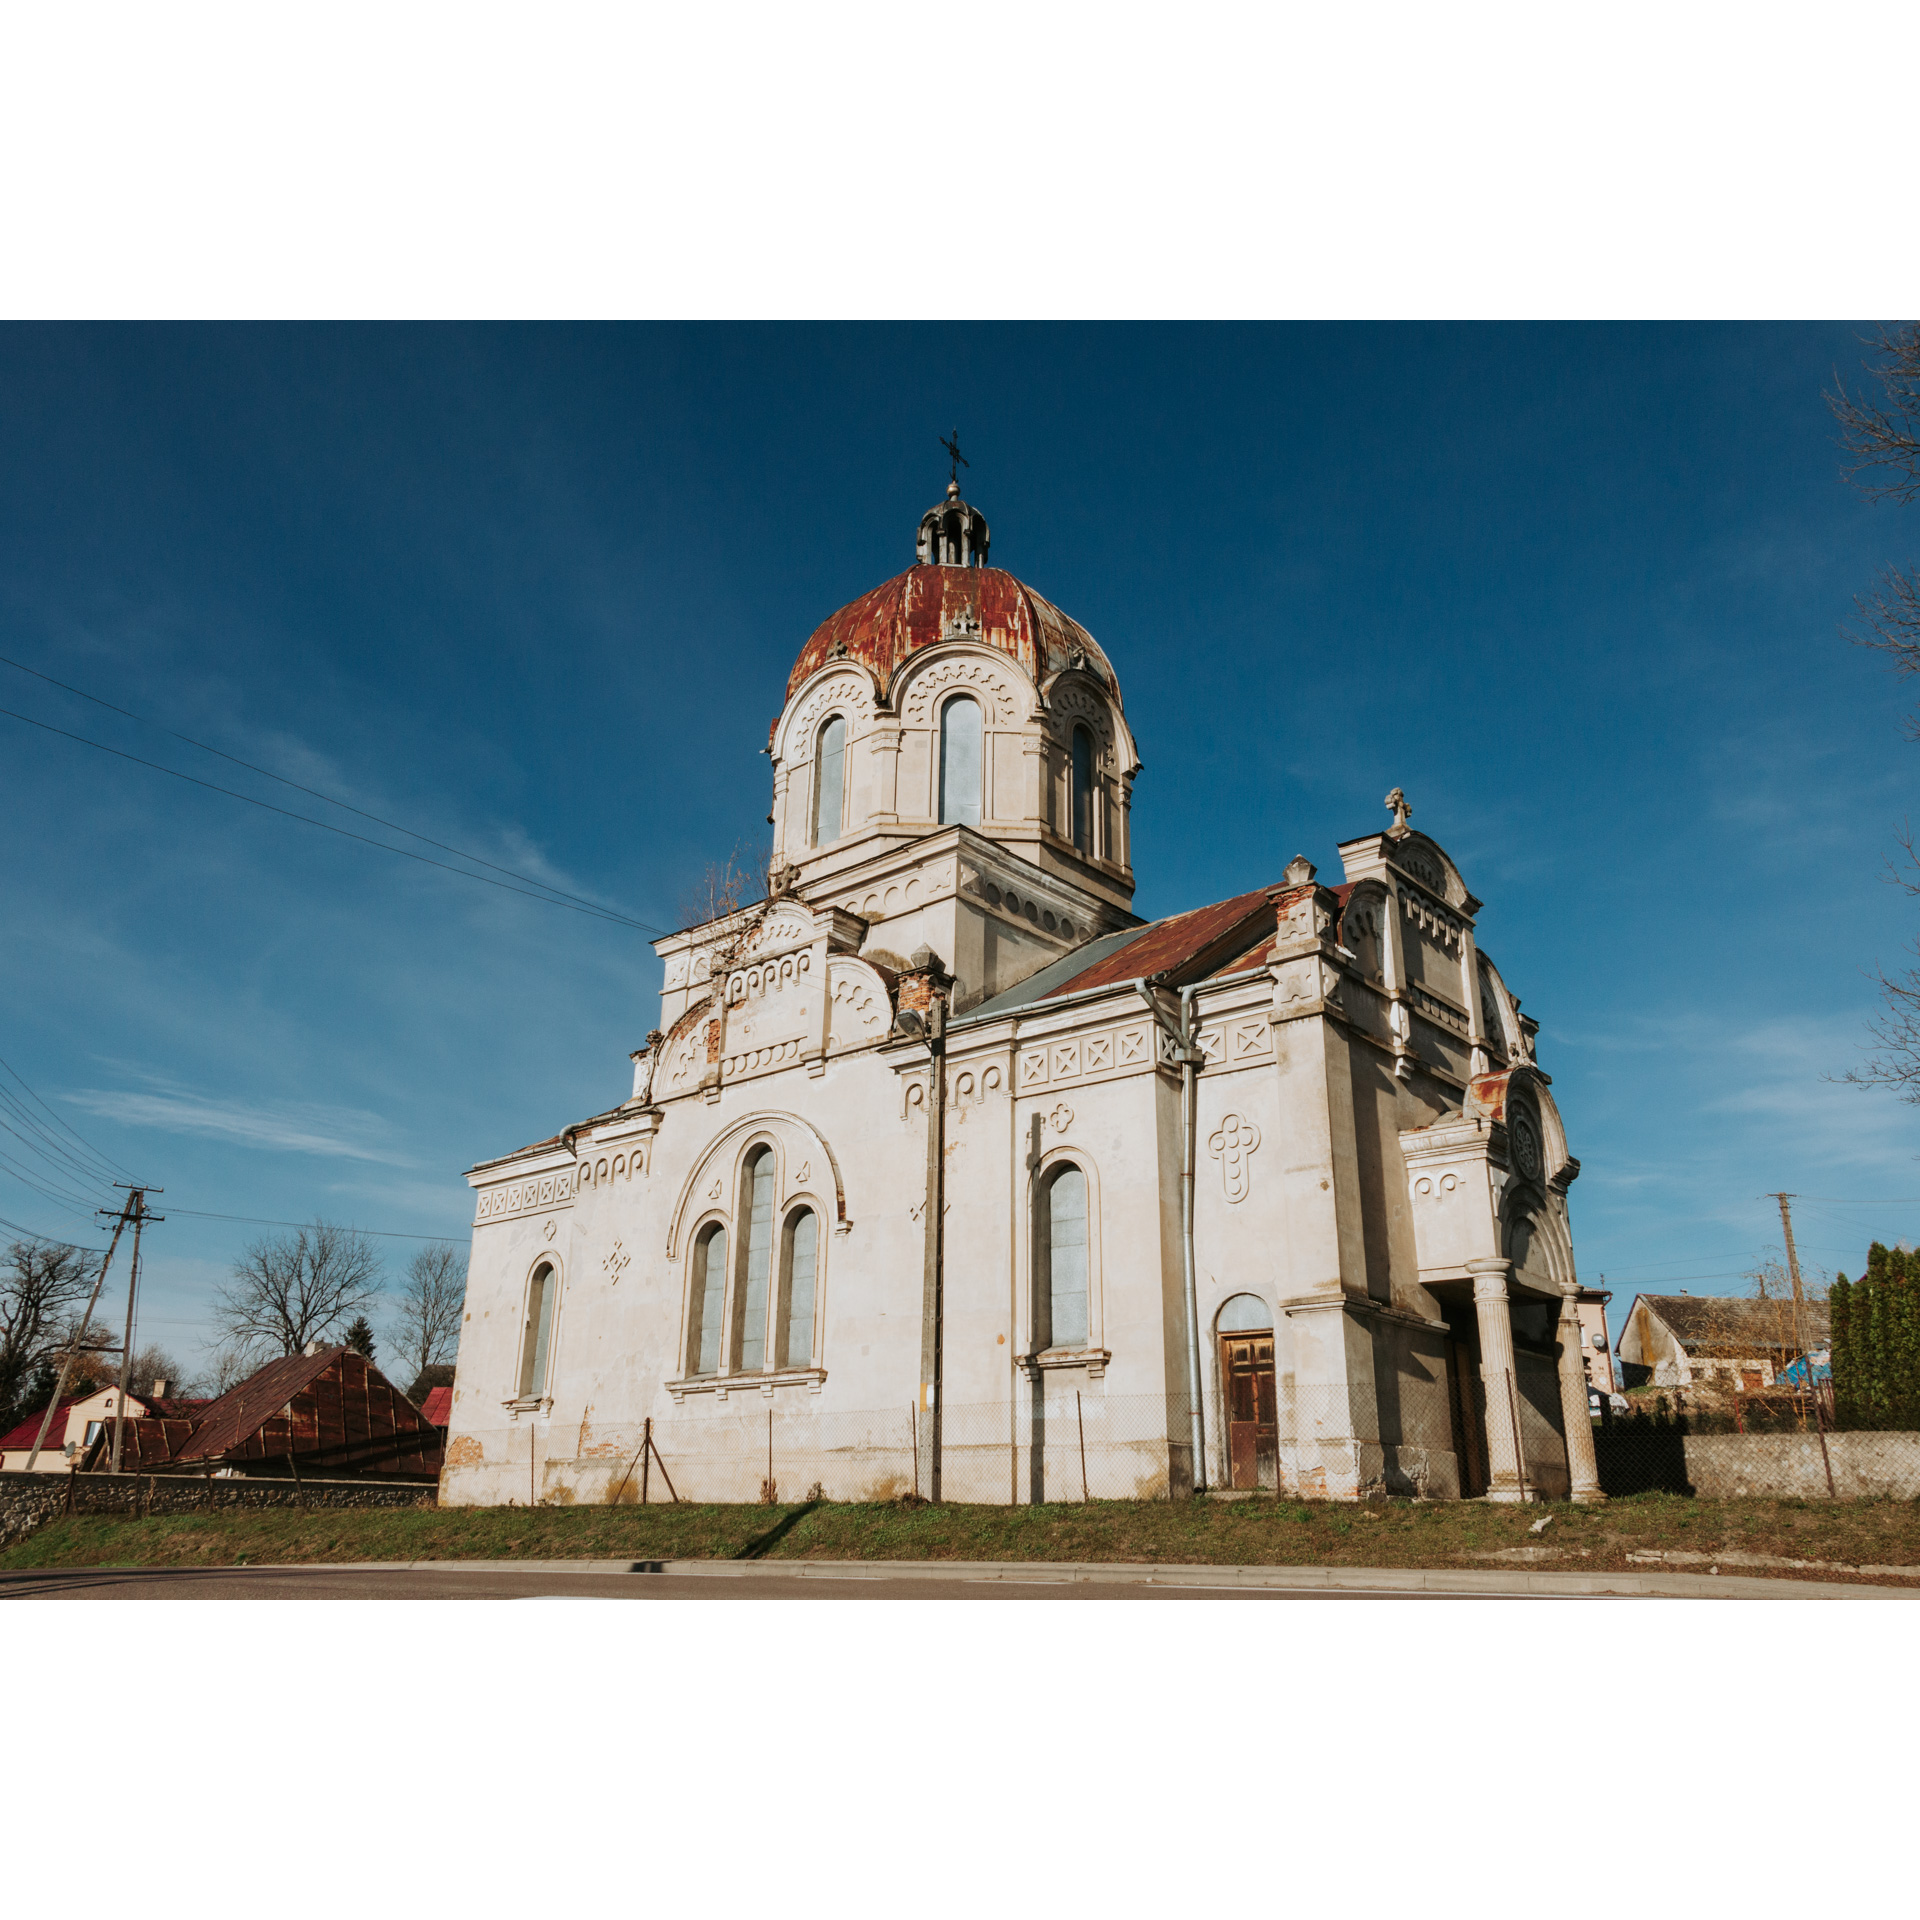 A bright, brick Orthodox church with decorative windows and a dome